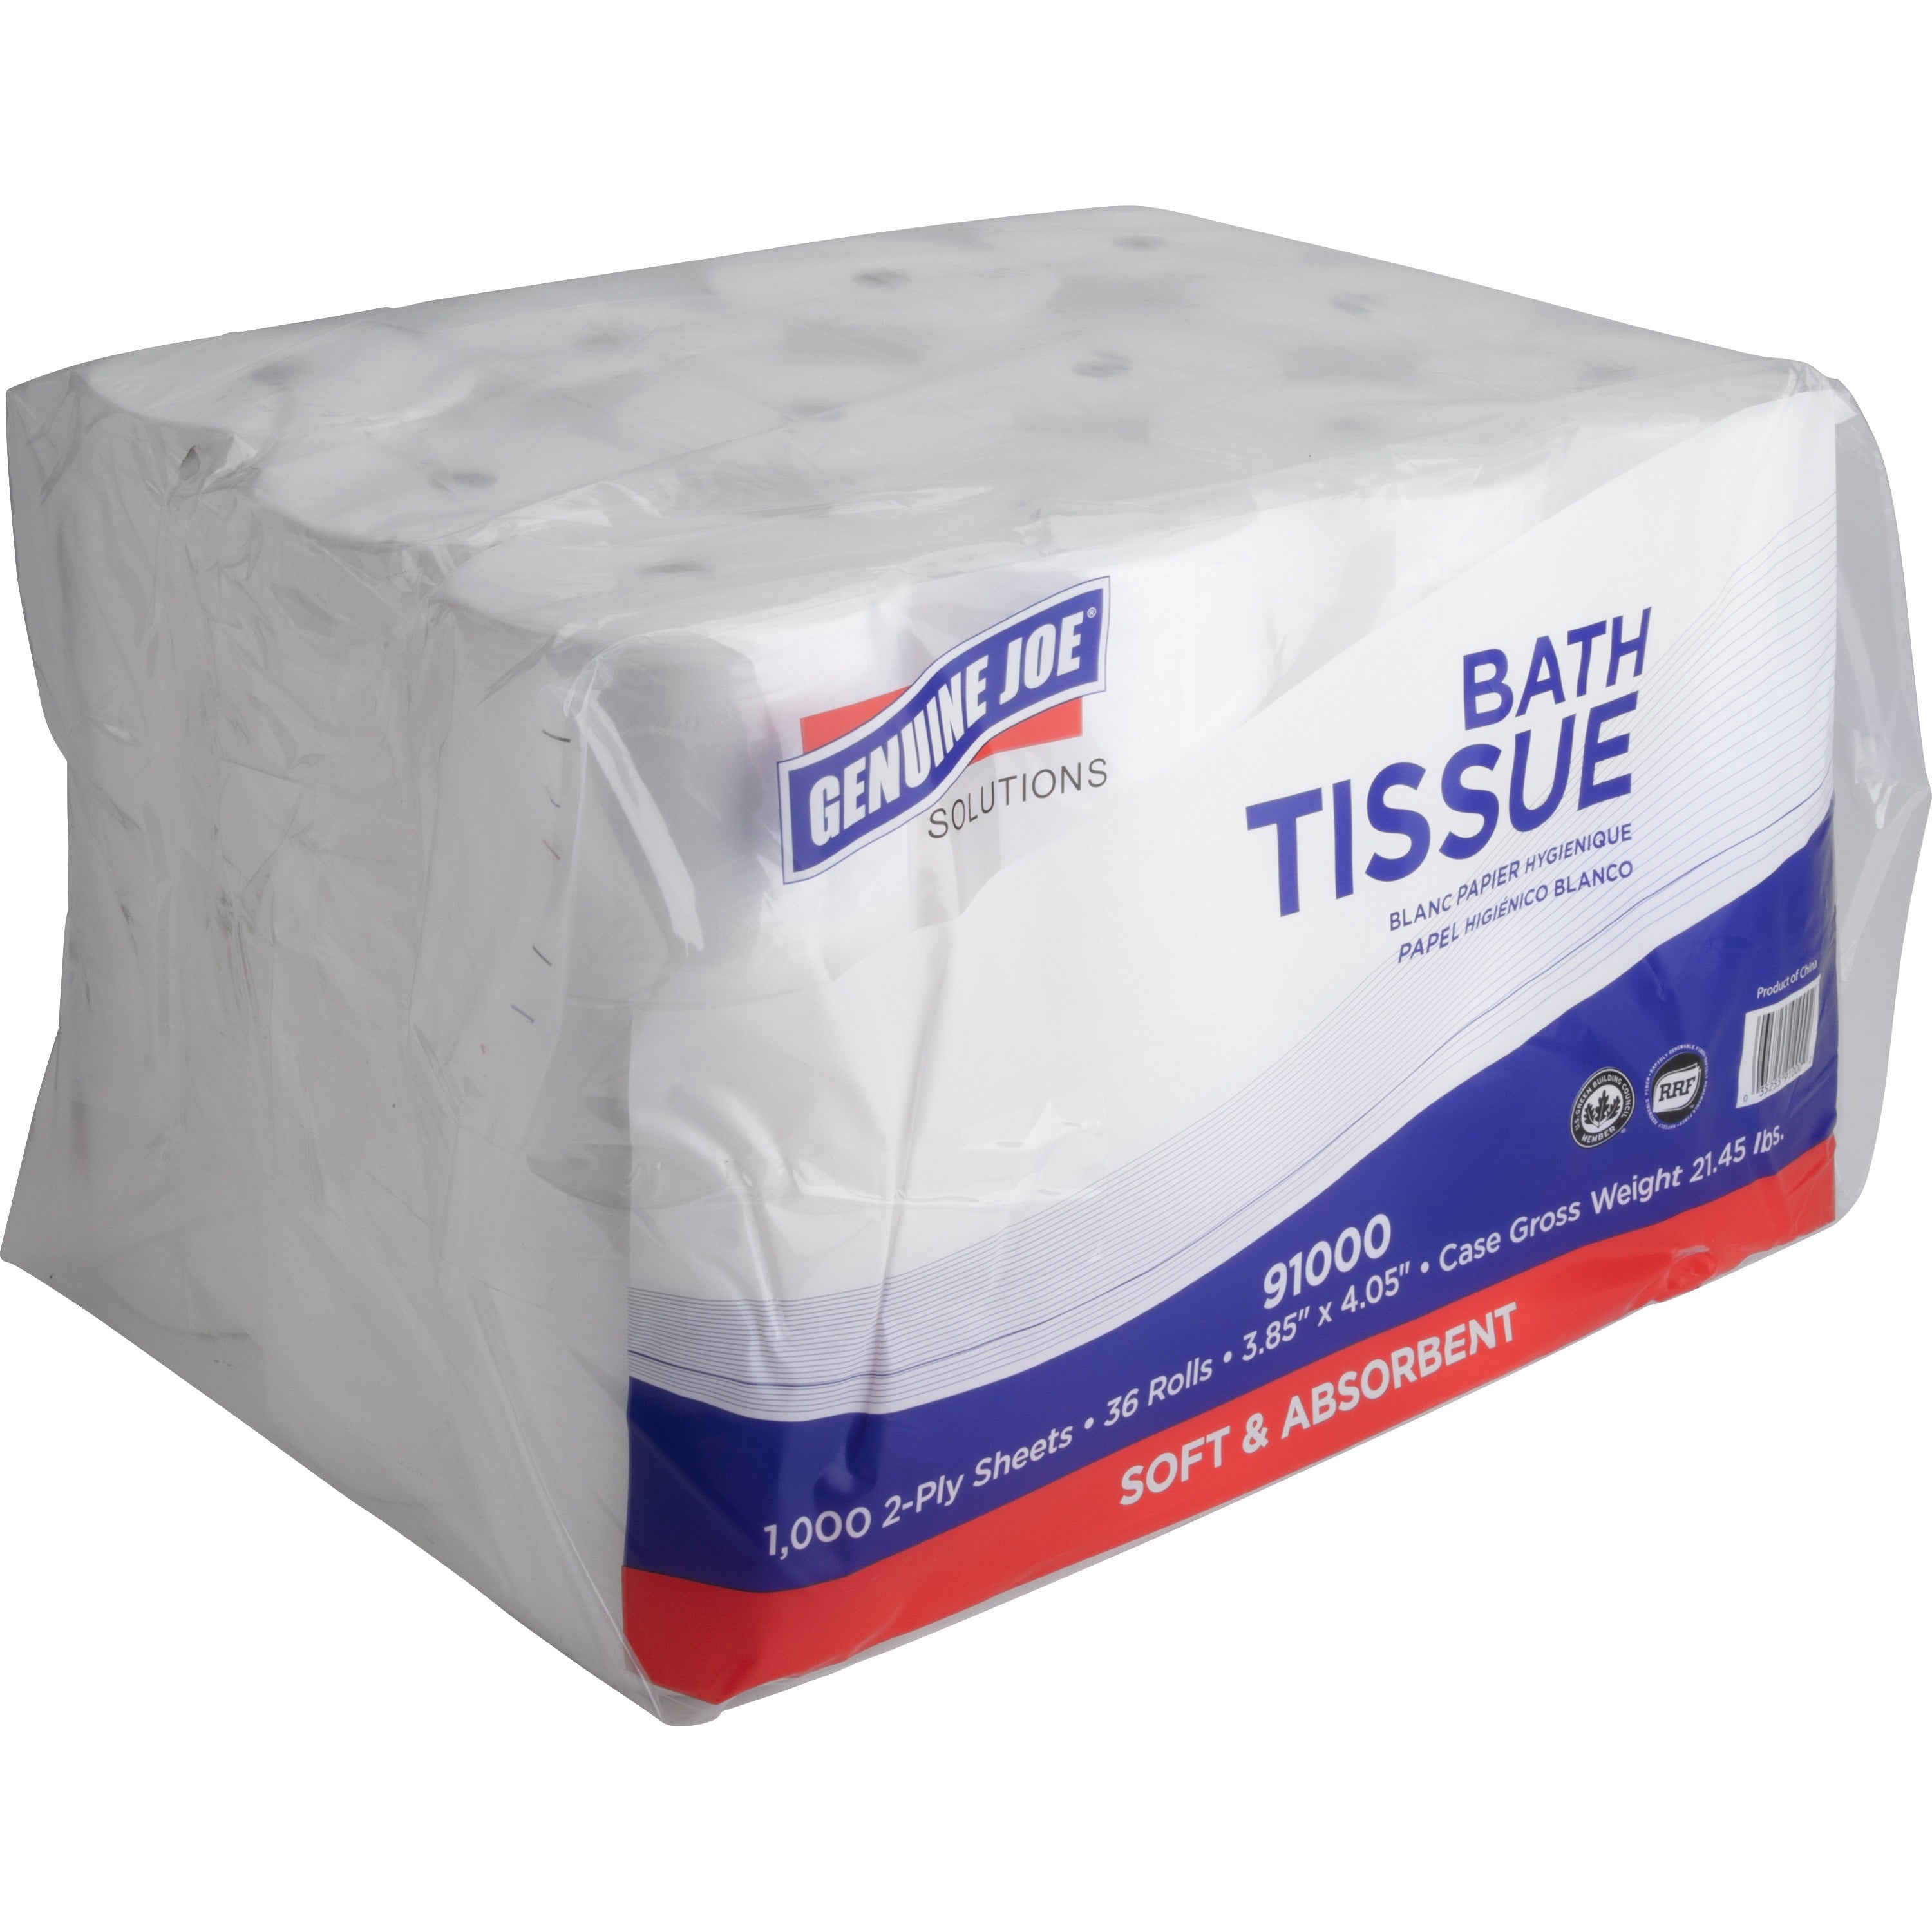 genuine-joe-solutions-double-capacity-bath-tissue-2-ply-1000-sheets-roll-071-core-white-virgin-fiber-embossed-chlorine-free-for-bathroom-36-carton_gjo91000 - 4